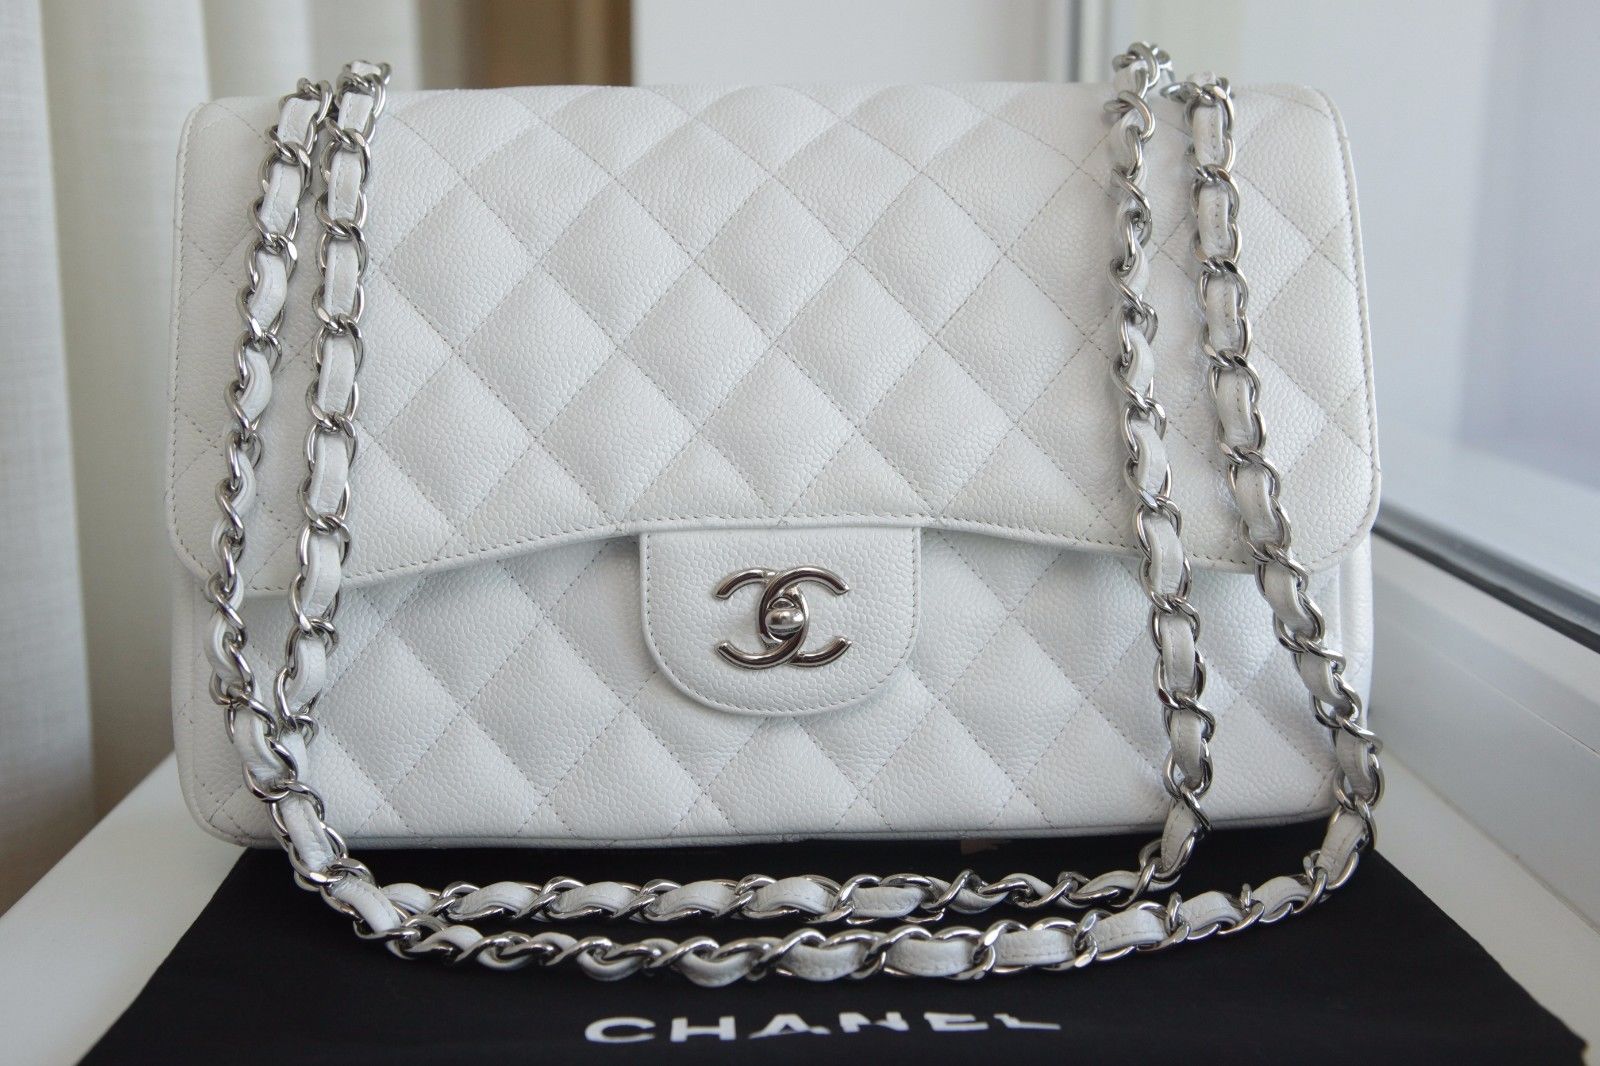 Chanel Black Ballerine Flap Bag - Excellent Condition